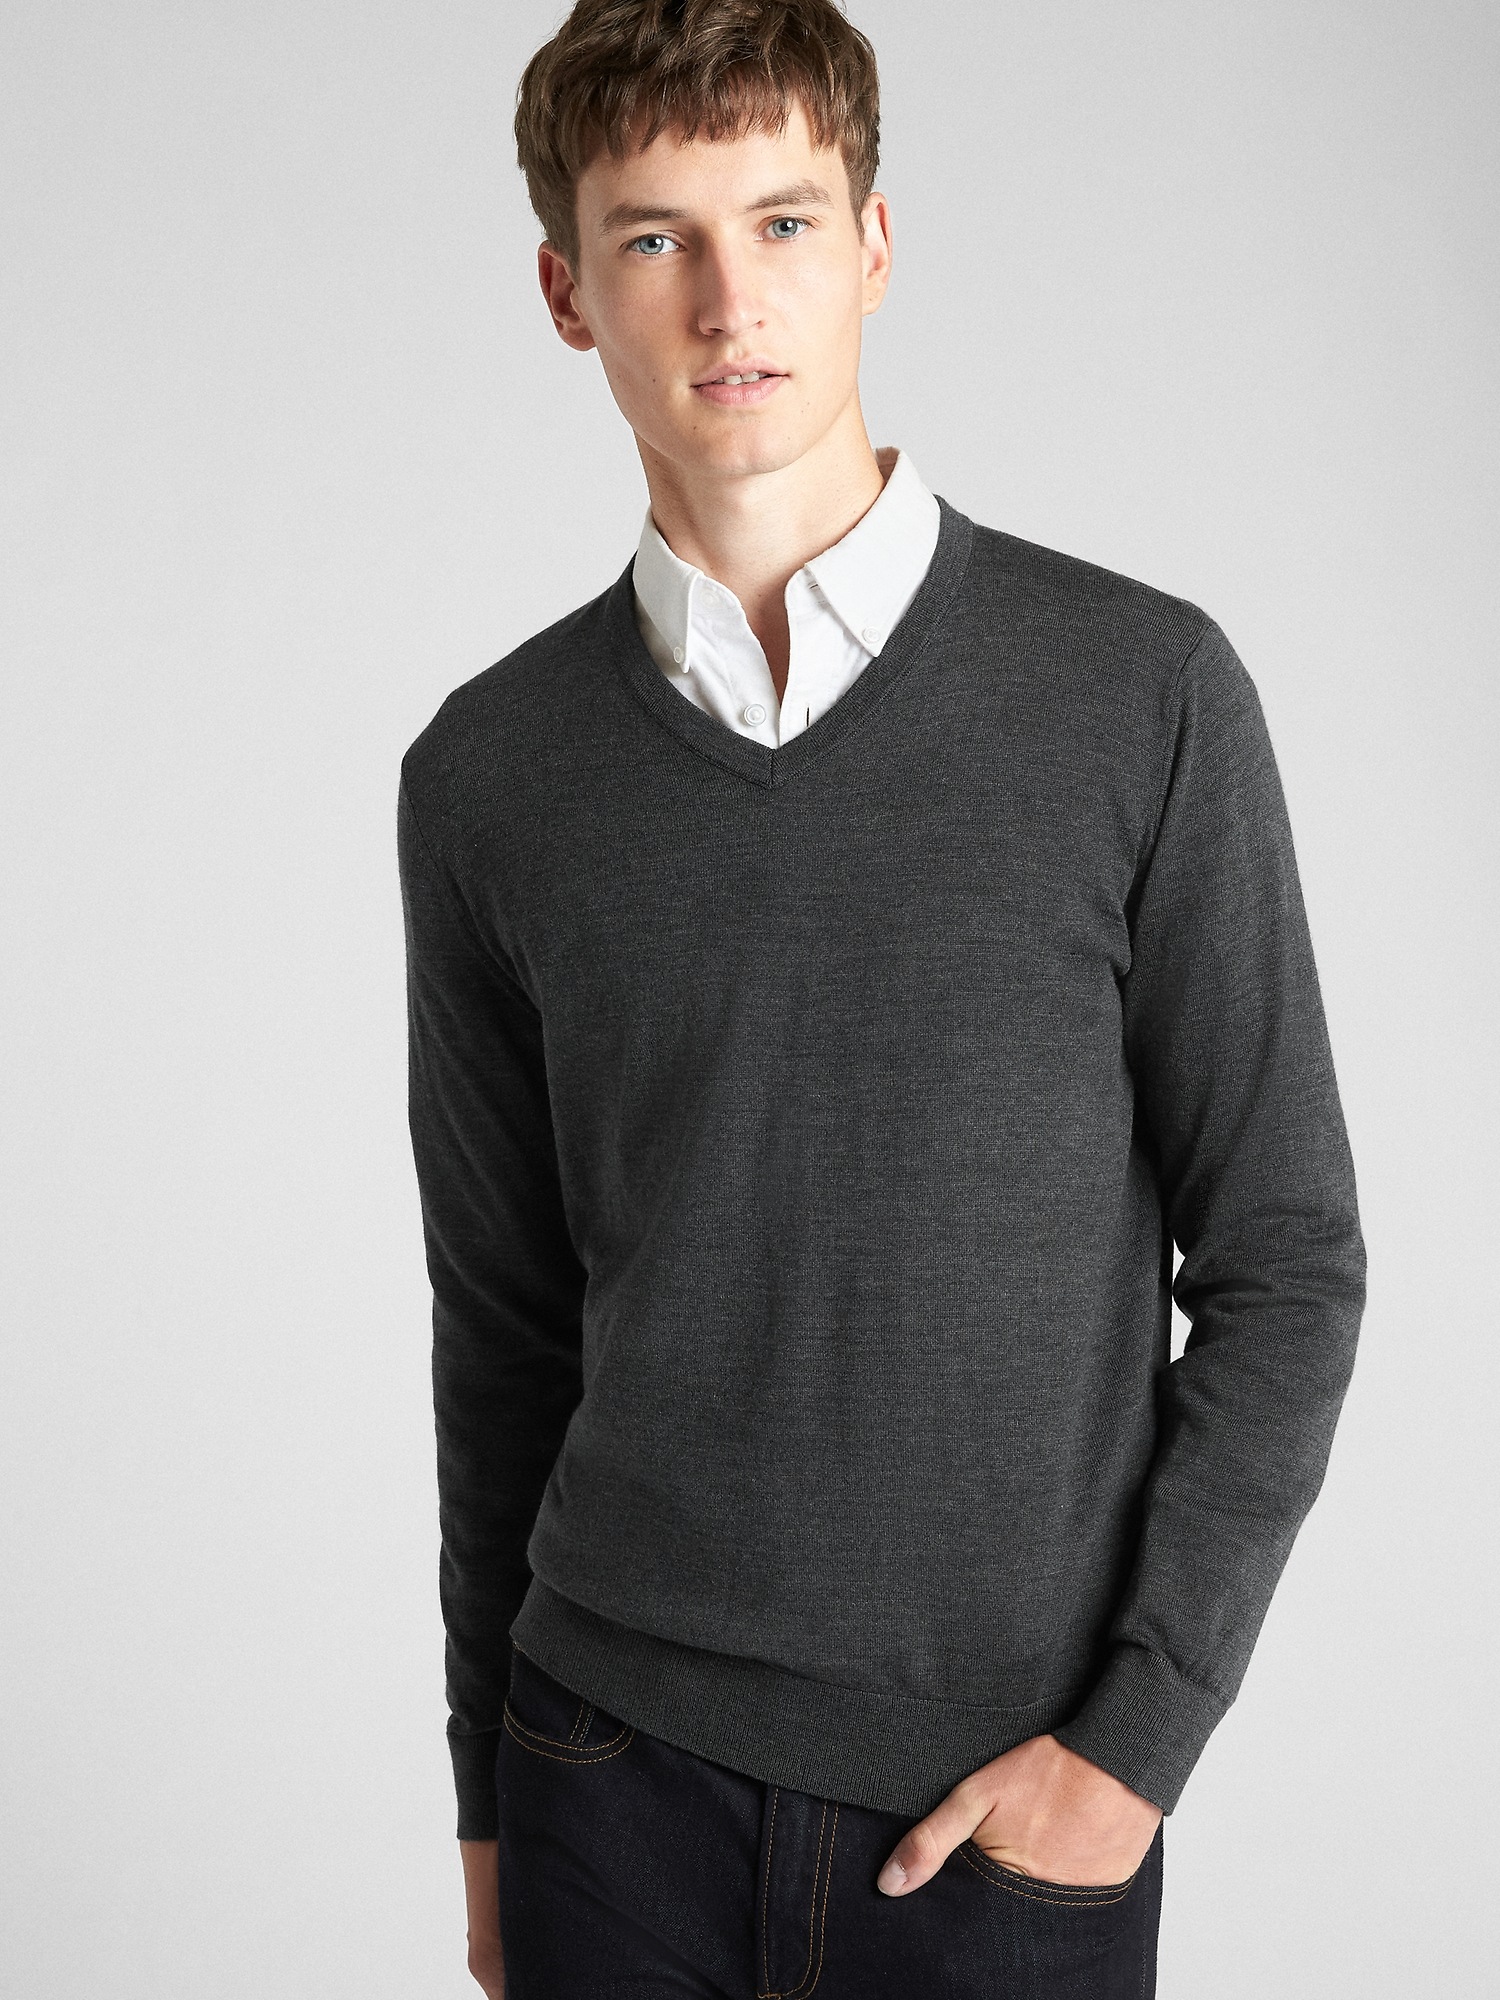 V-Neck Pullover Sweater in Merino Wool | Gap